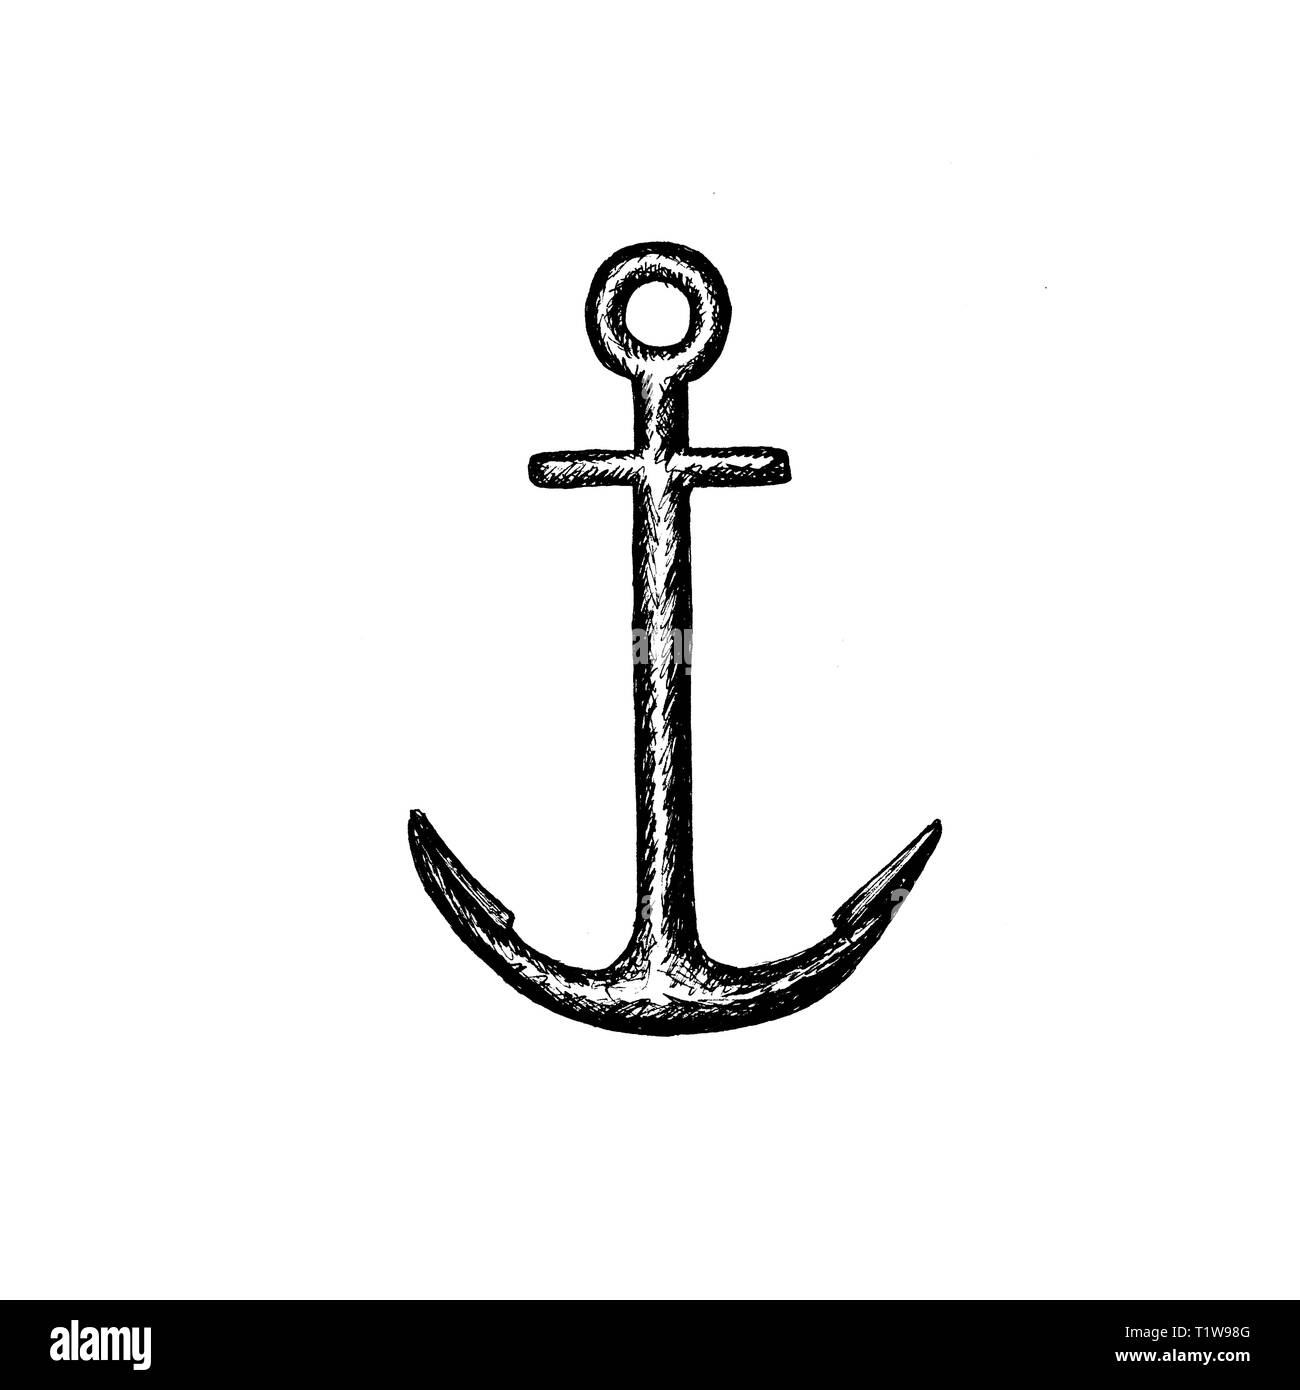 Anchor logo icon ink pen sketch. Nautical maritime sea ocean boat illustration symbol Stock Photo